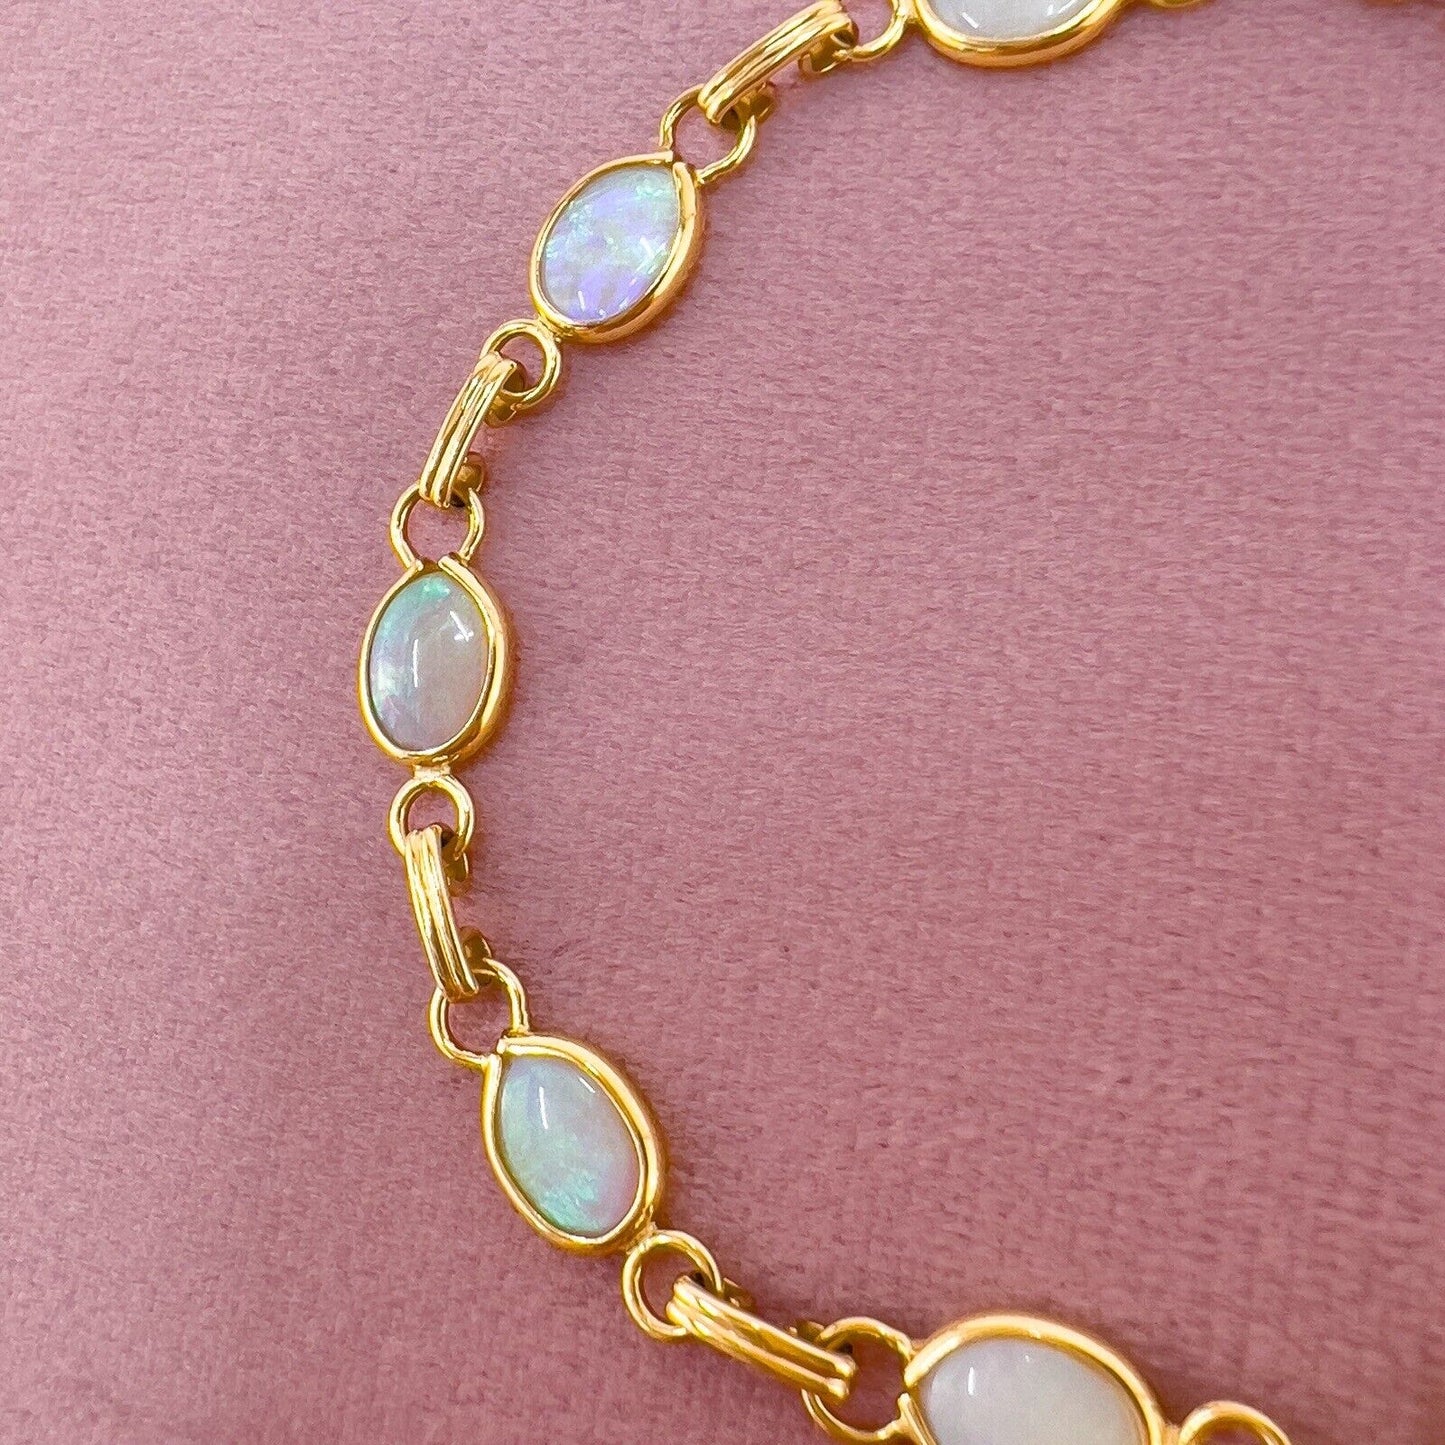 Solid 14k Yellow Gold Opal Station Link Bracelet, New 7.25"